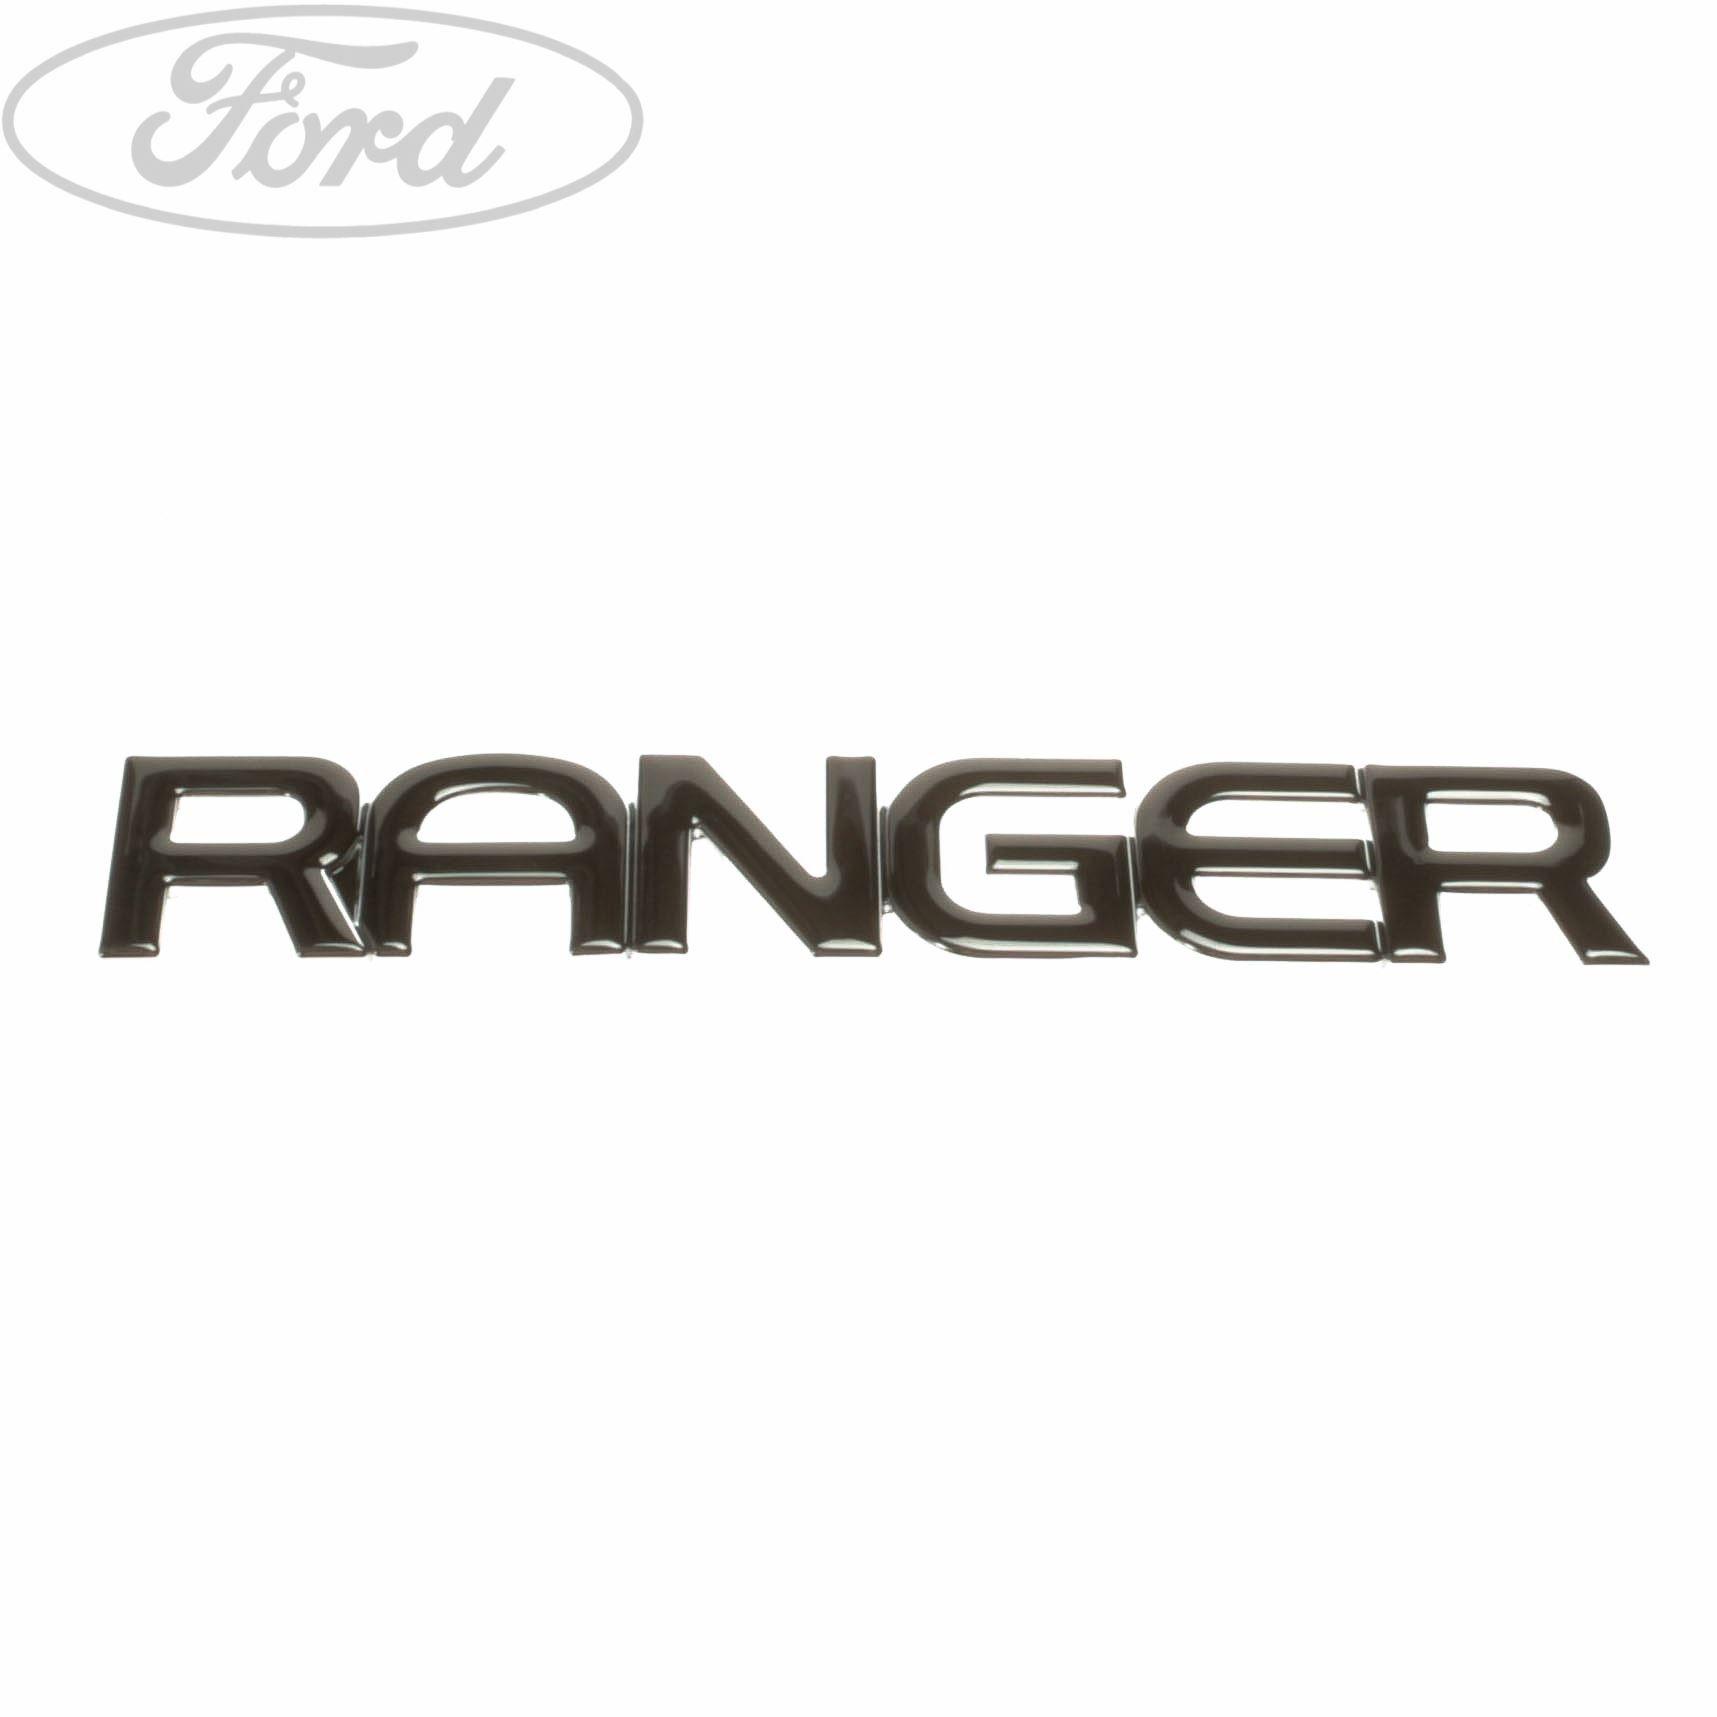 Ford Ranger Logo - Genuine Ford Ranger Tail Rear Door Name Plate Badge Emblem Left Side